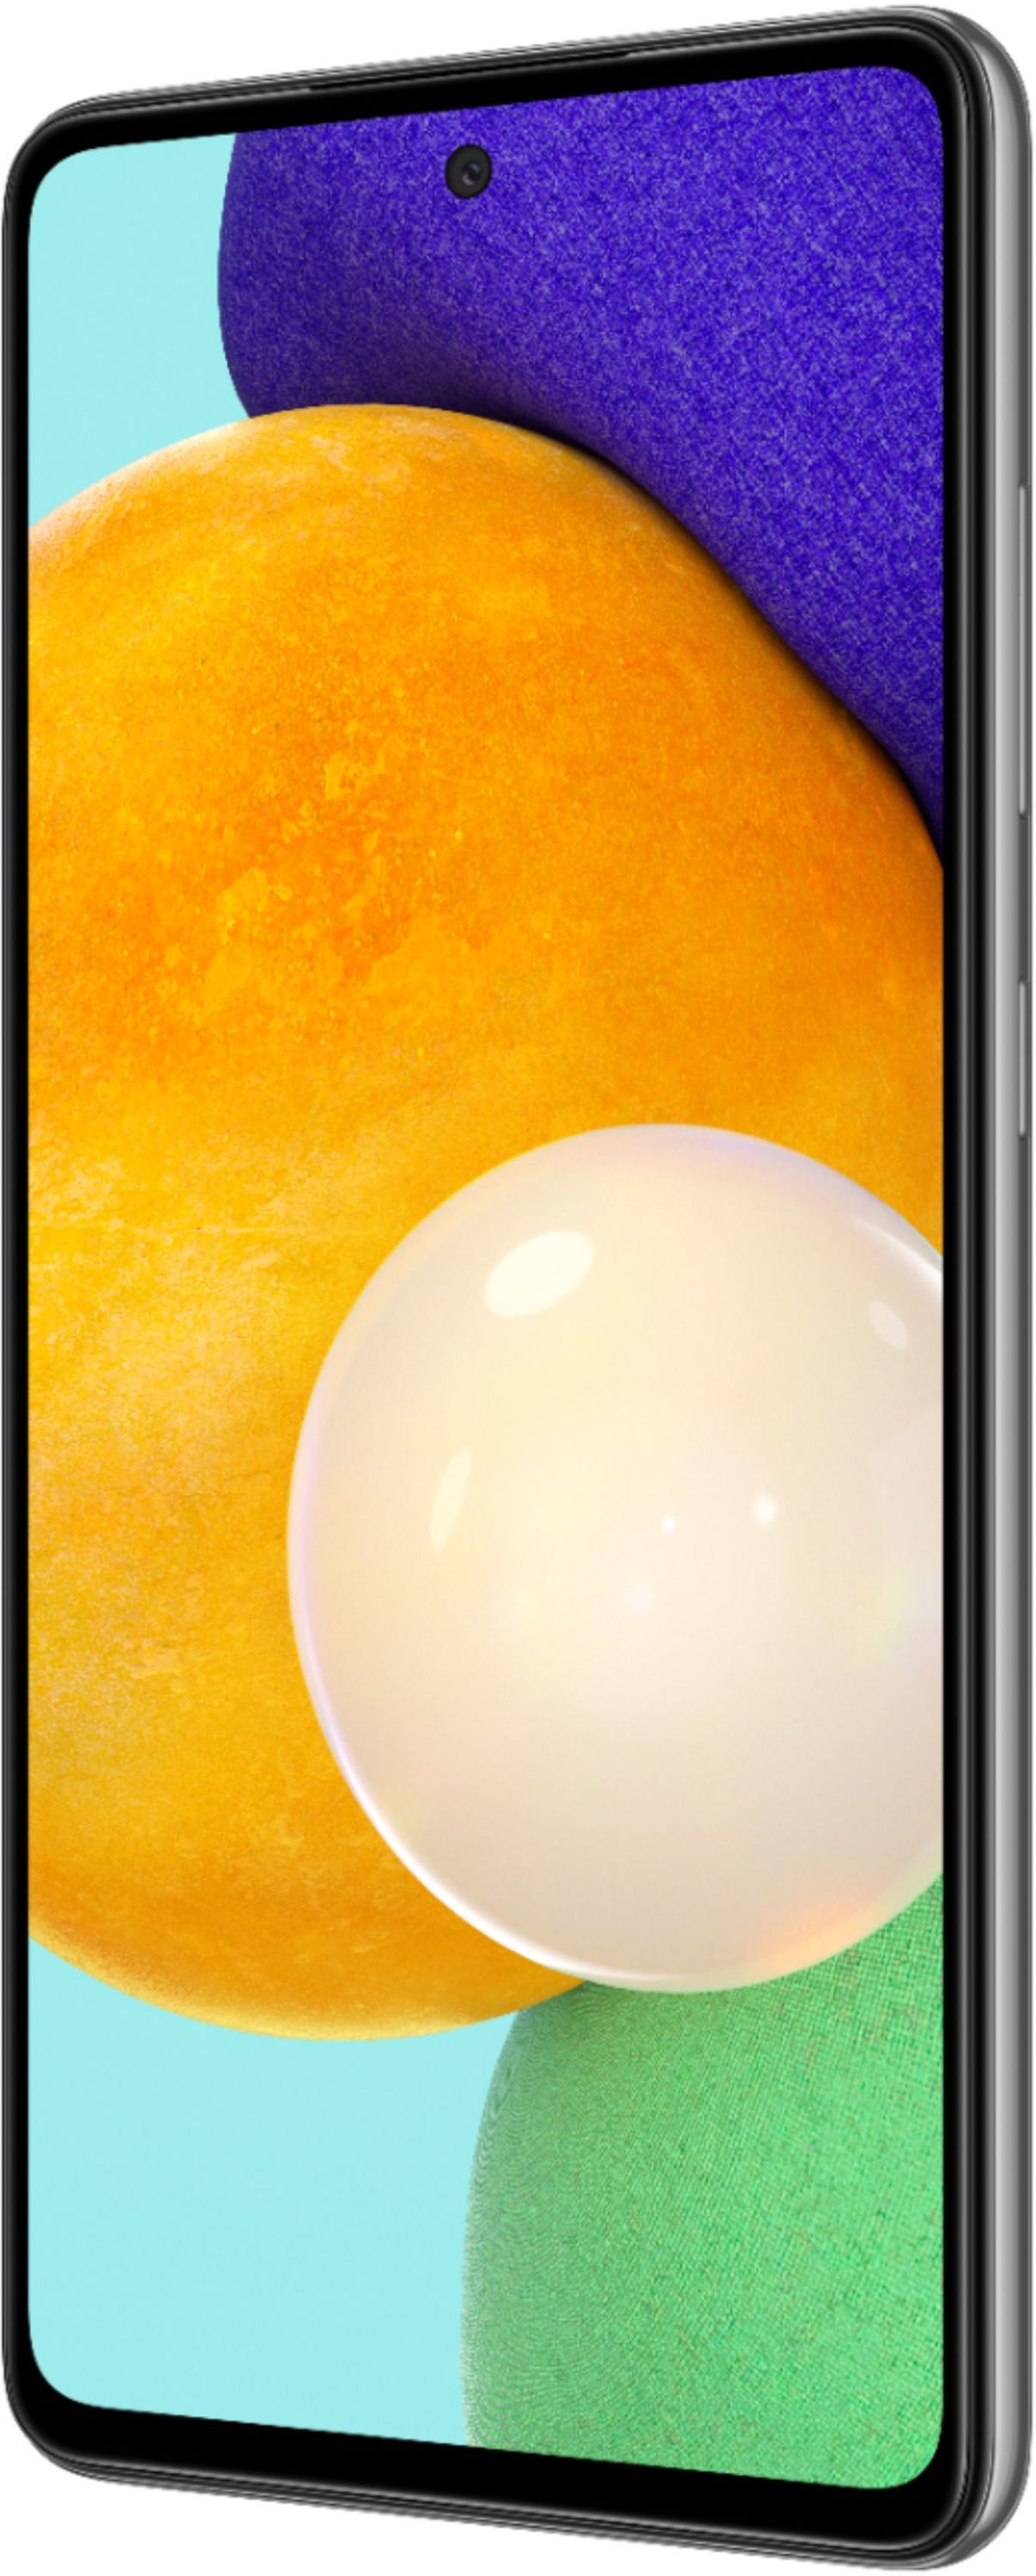 SAMSUNG Galaxy A52 5G A526U 128GB GSM / CDMA Unlocked Android Smartphone (US Version) - Awesome Black - image 3 of 6